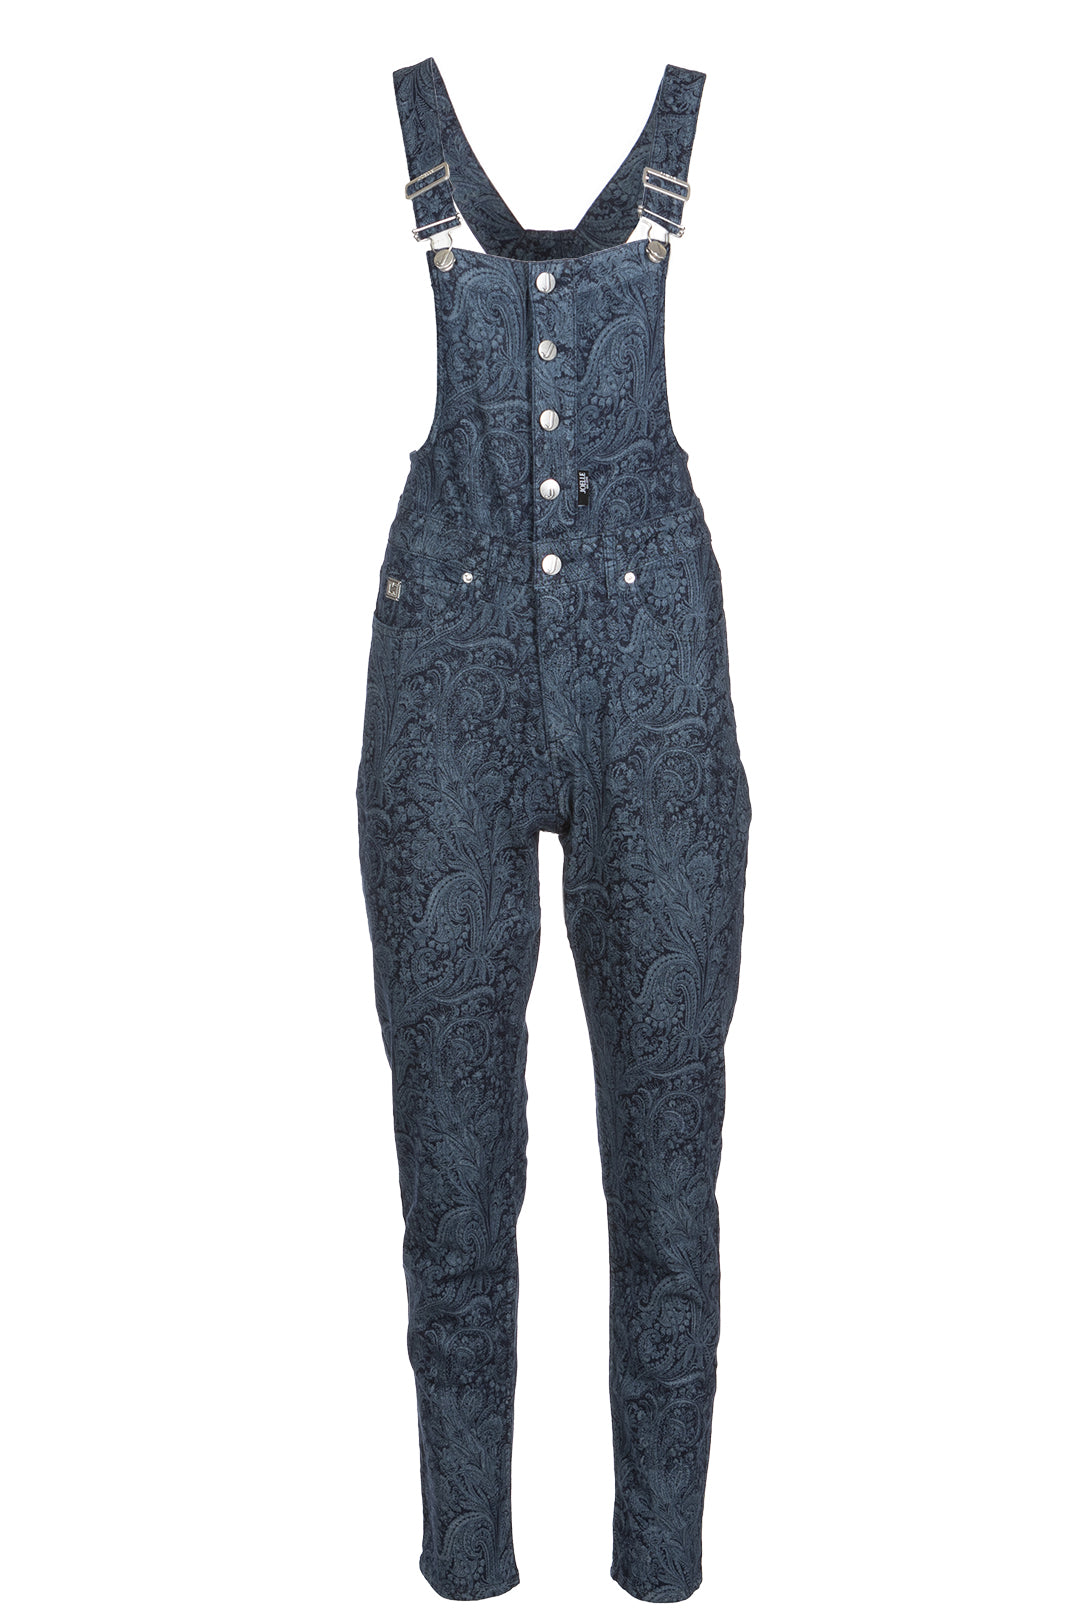 Black paisley patterned denim overalls | Serac